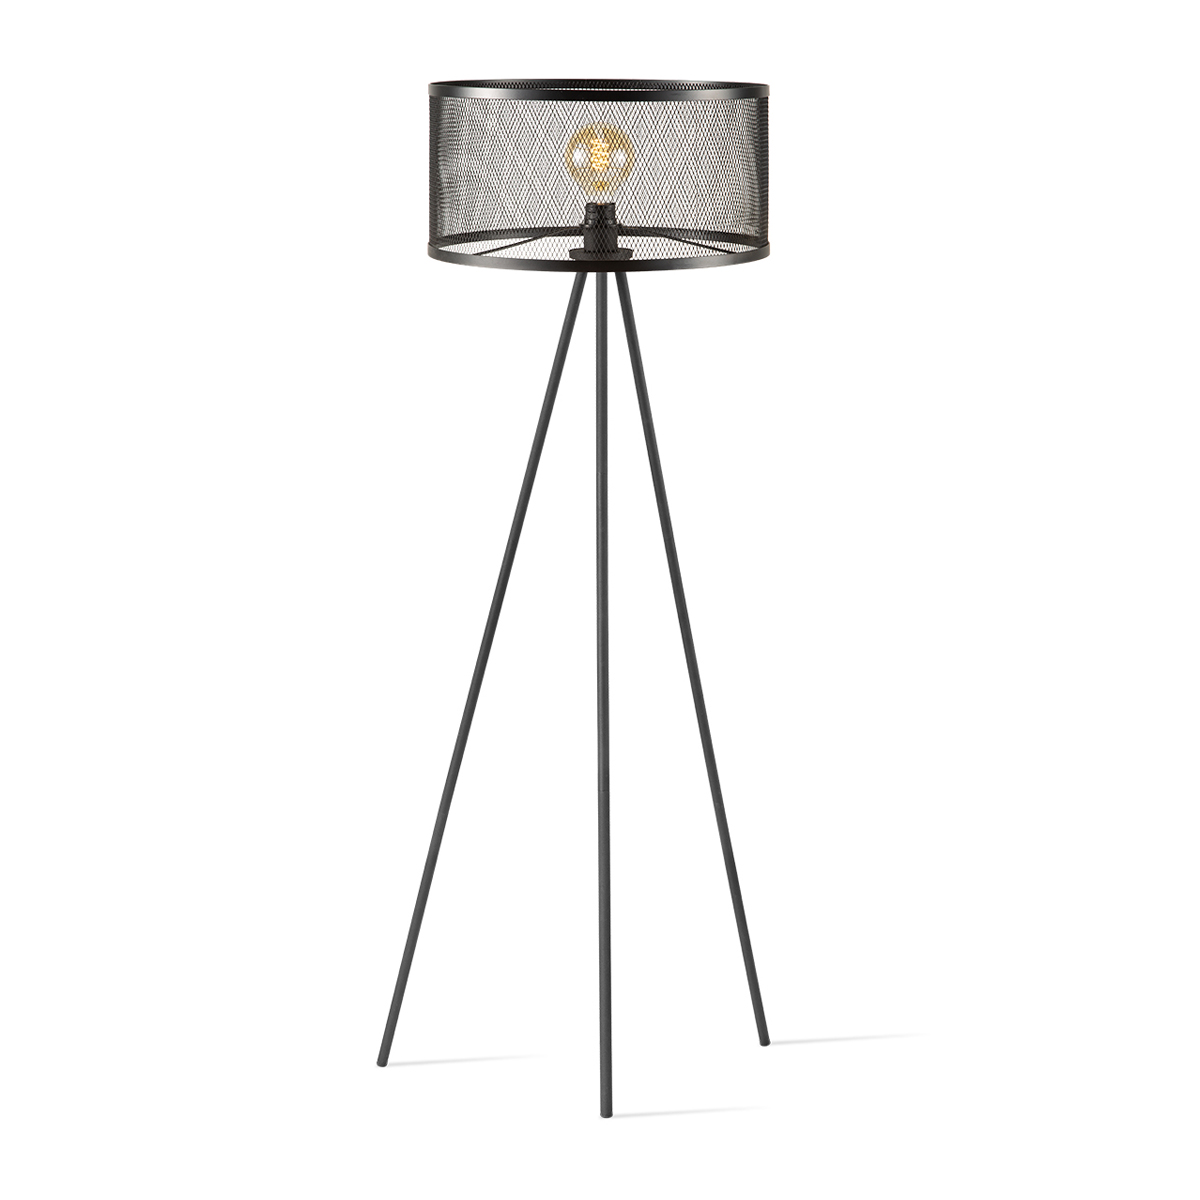 Tangla lighting - TLF7646-01BK - LED Floor lamp 1 Light - metal lampshade - black - tripod - E27